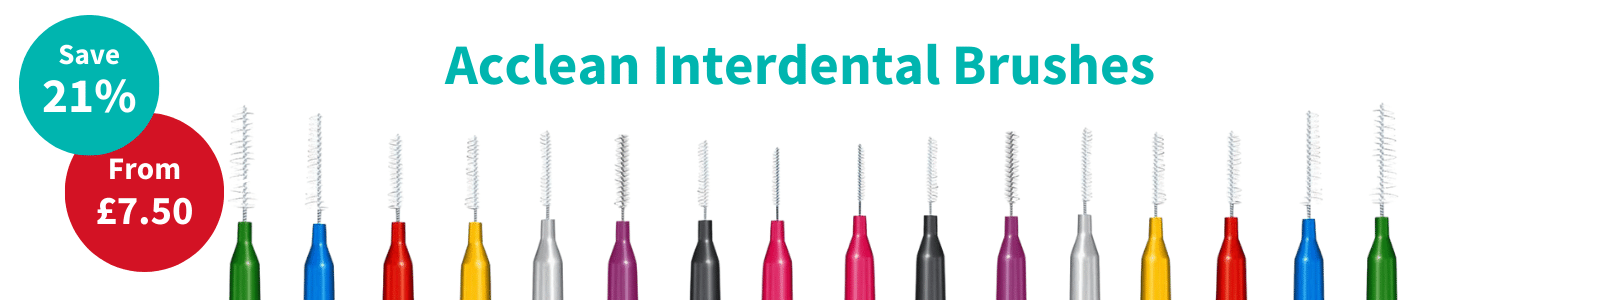 acclean interdental brushes